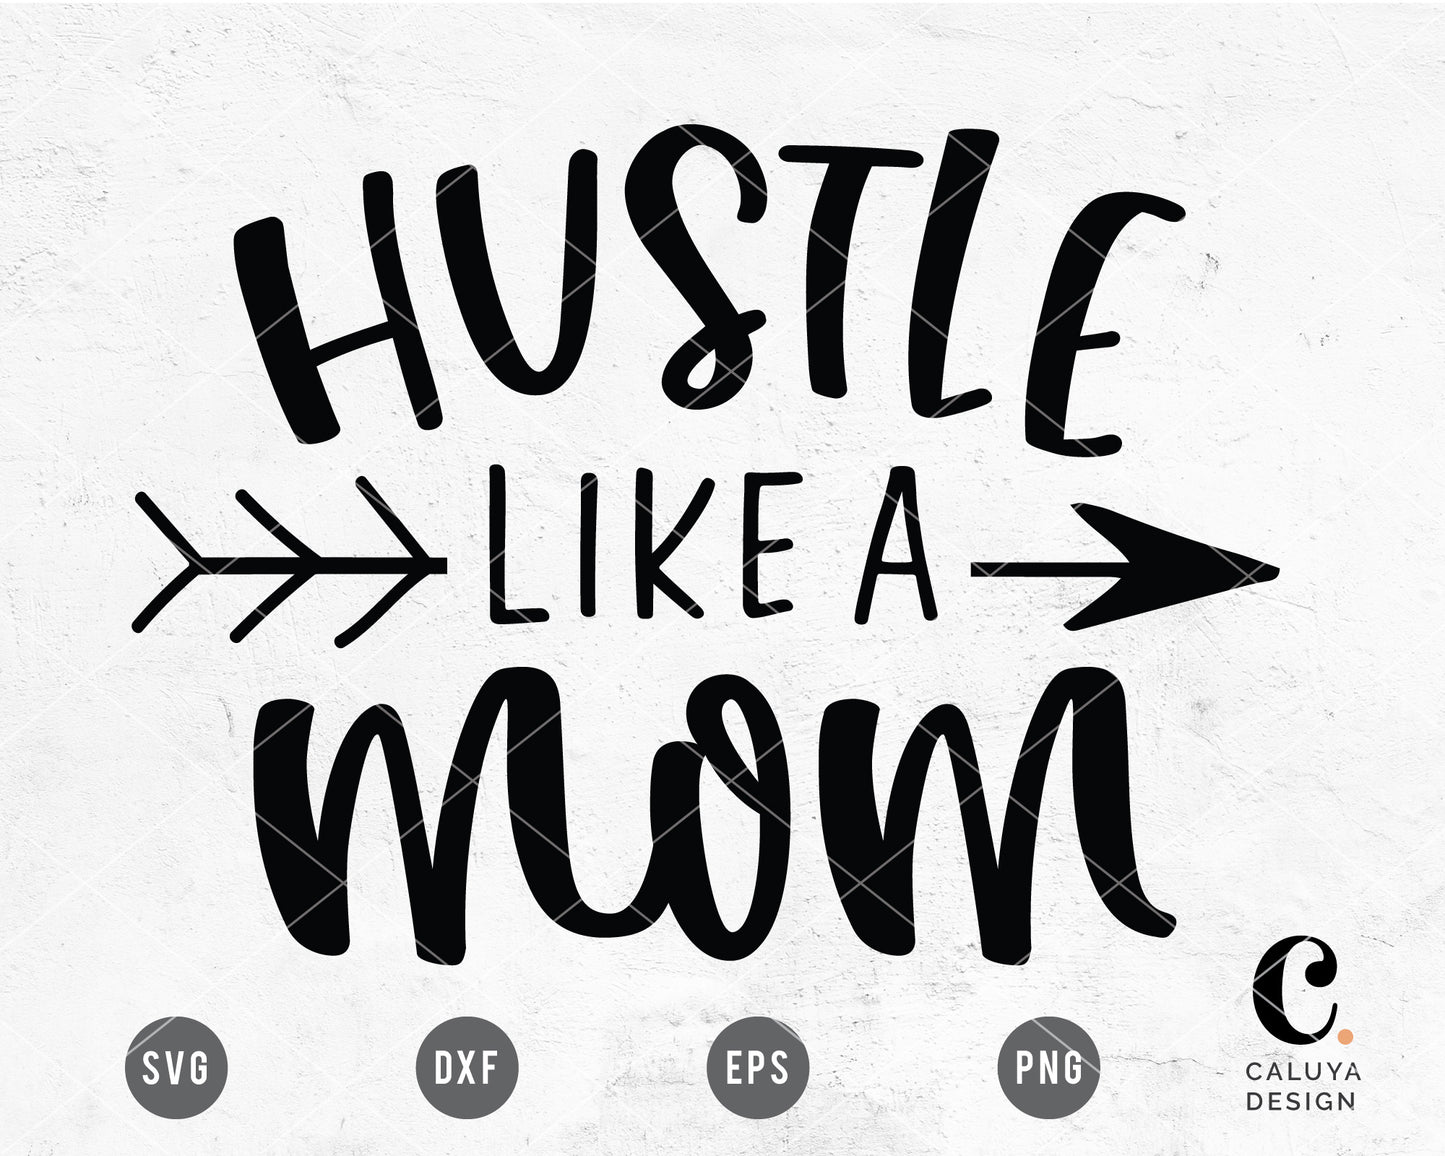 Hustle Like Mom SVG